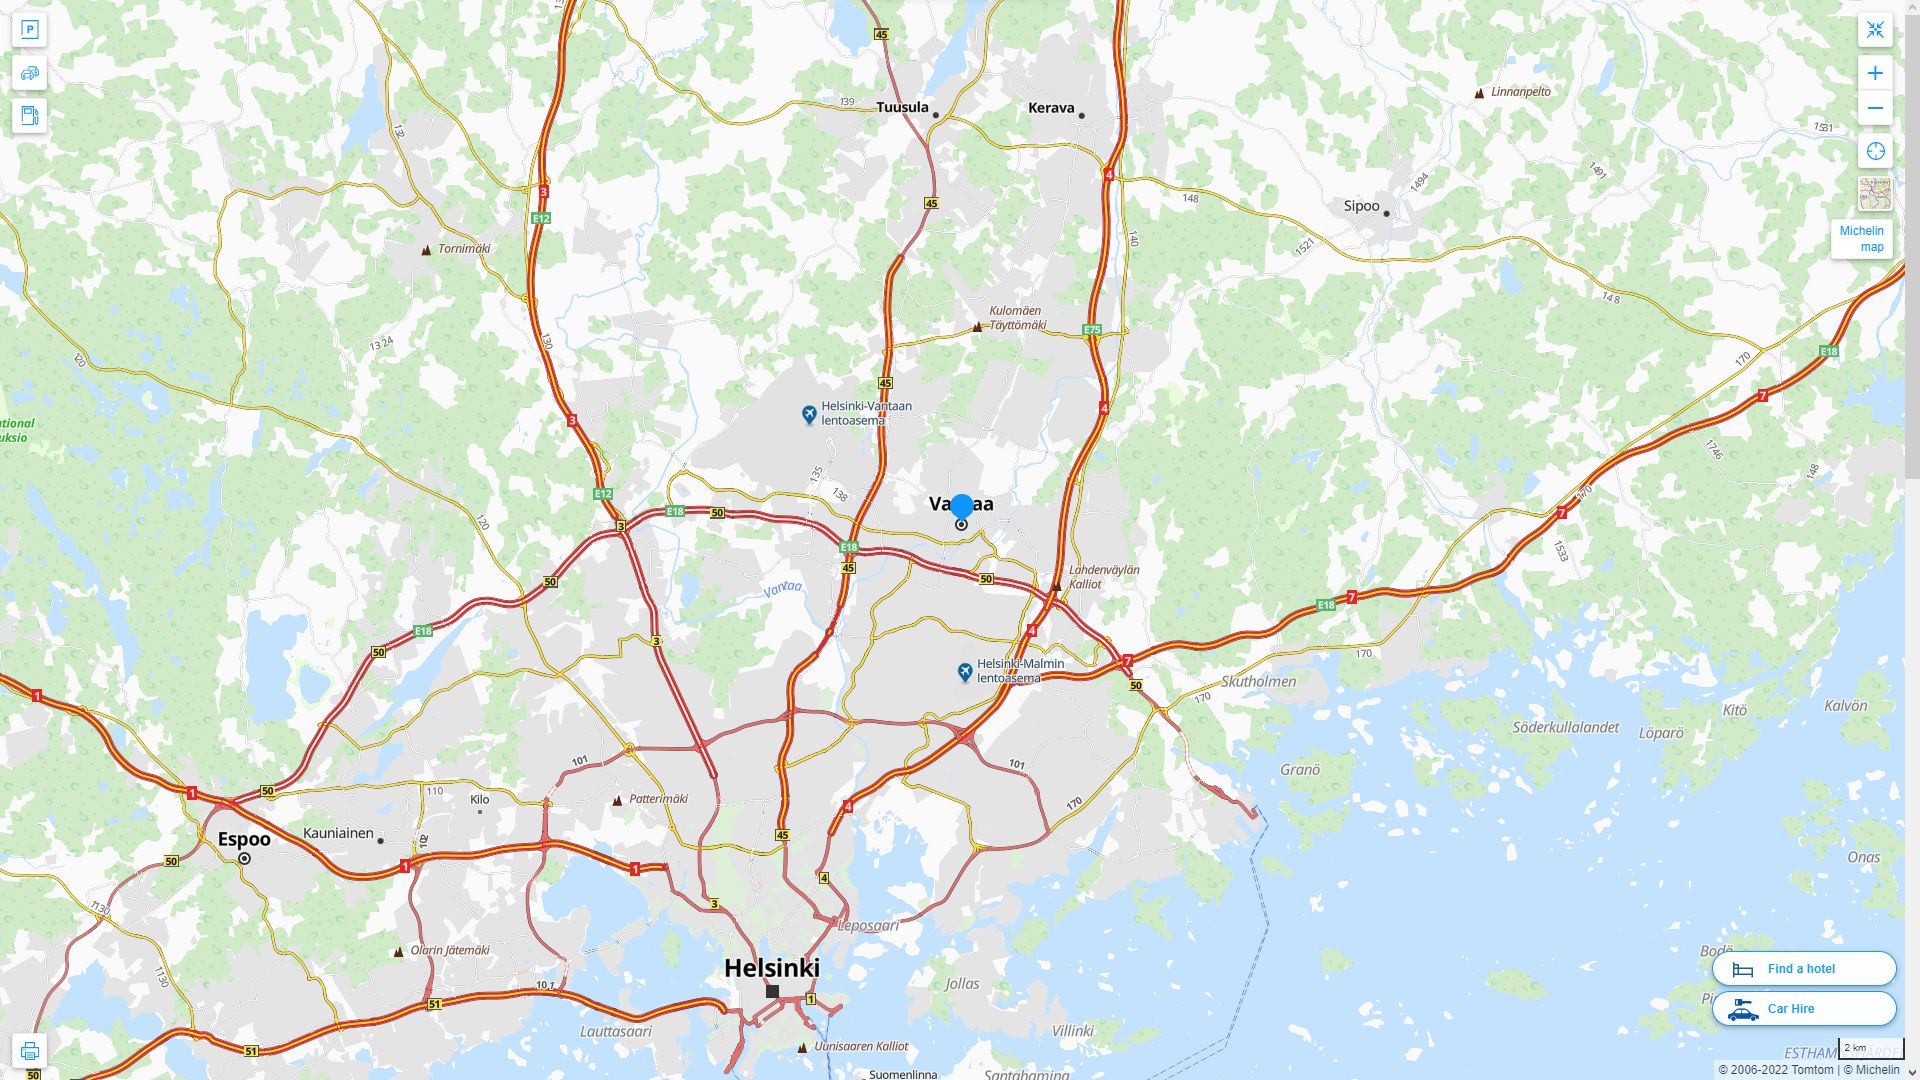 Vantaa Highway and Road Map